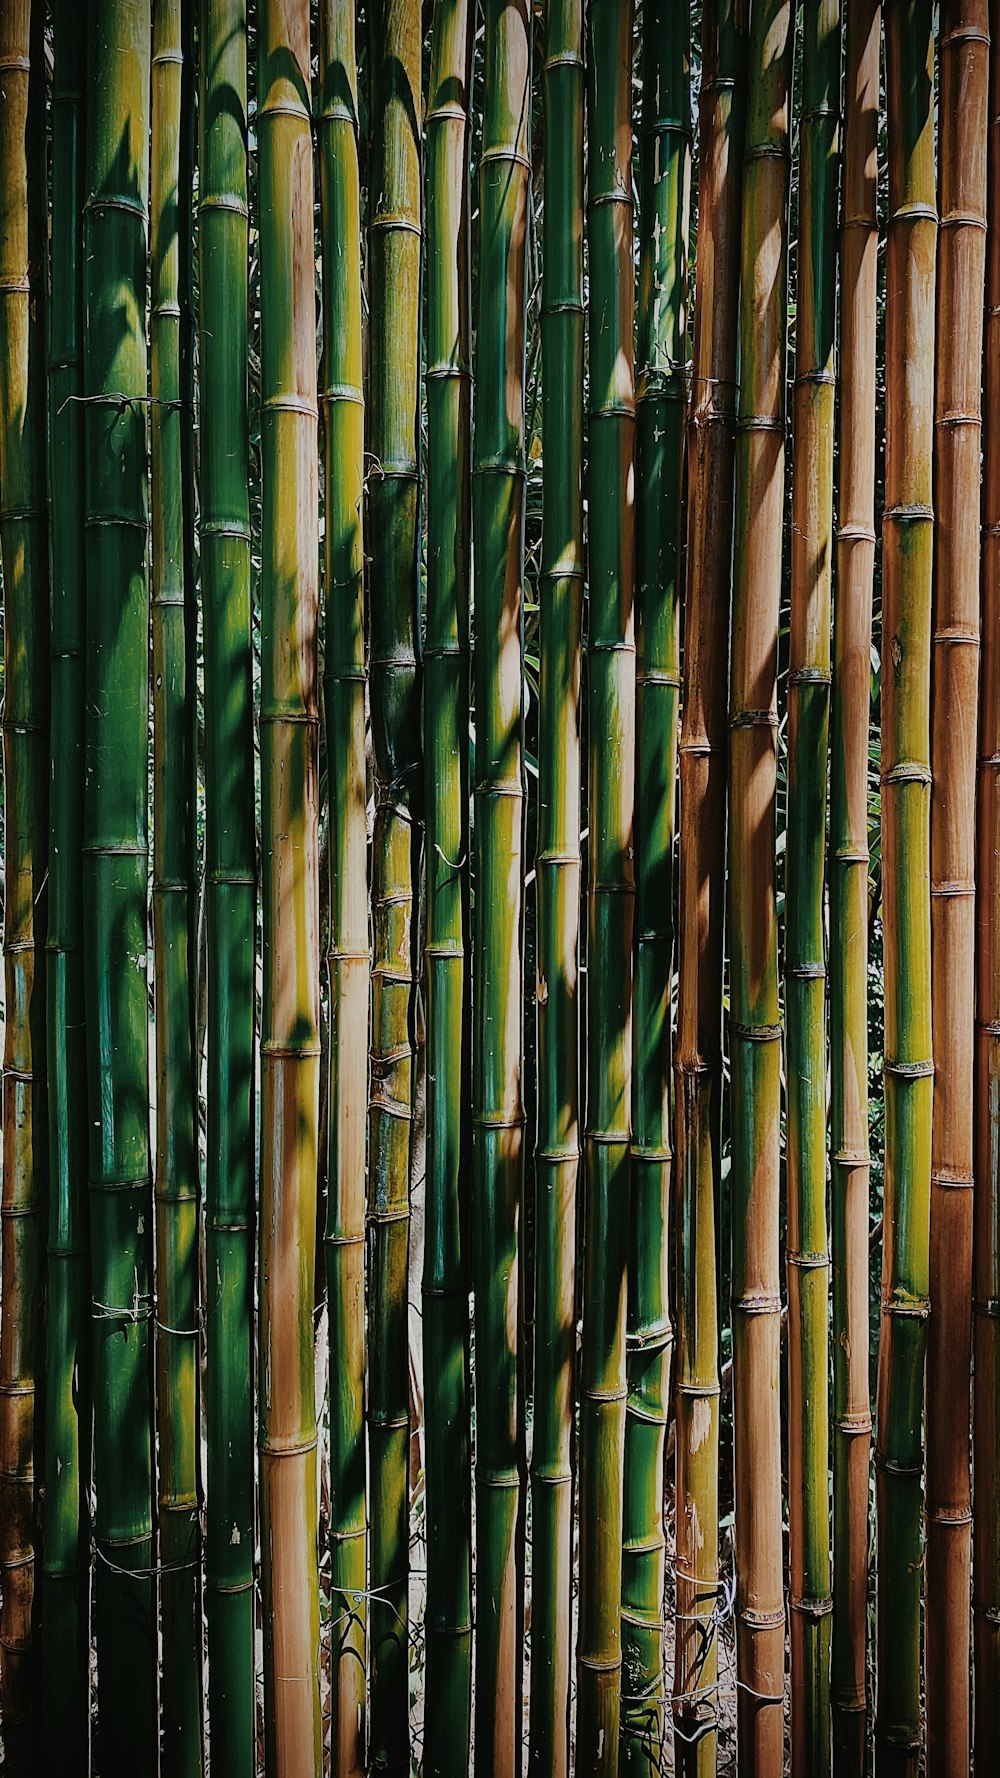 Green bamboo sticks during daytime photo – Free Plant Image on Unsplash